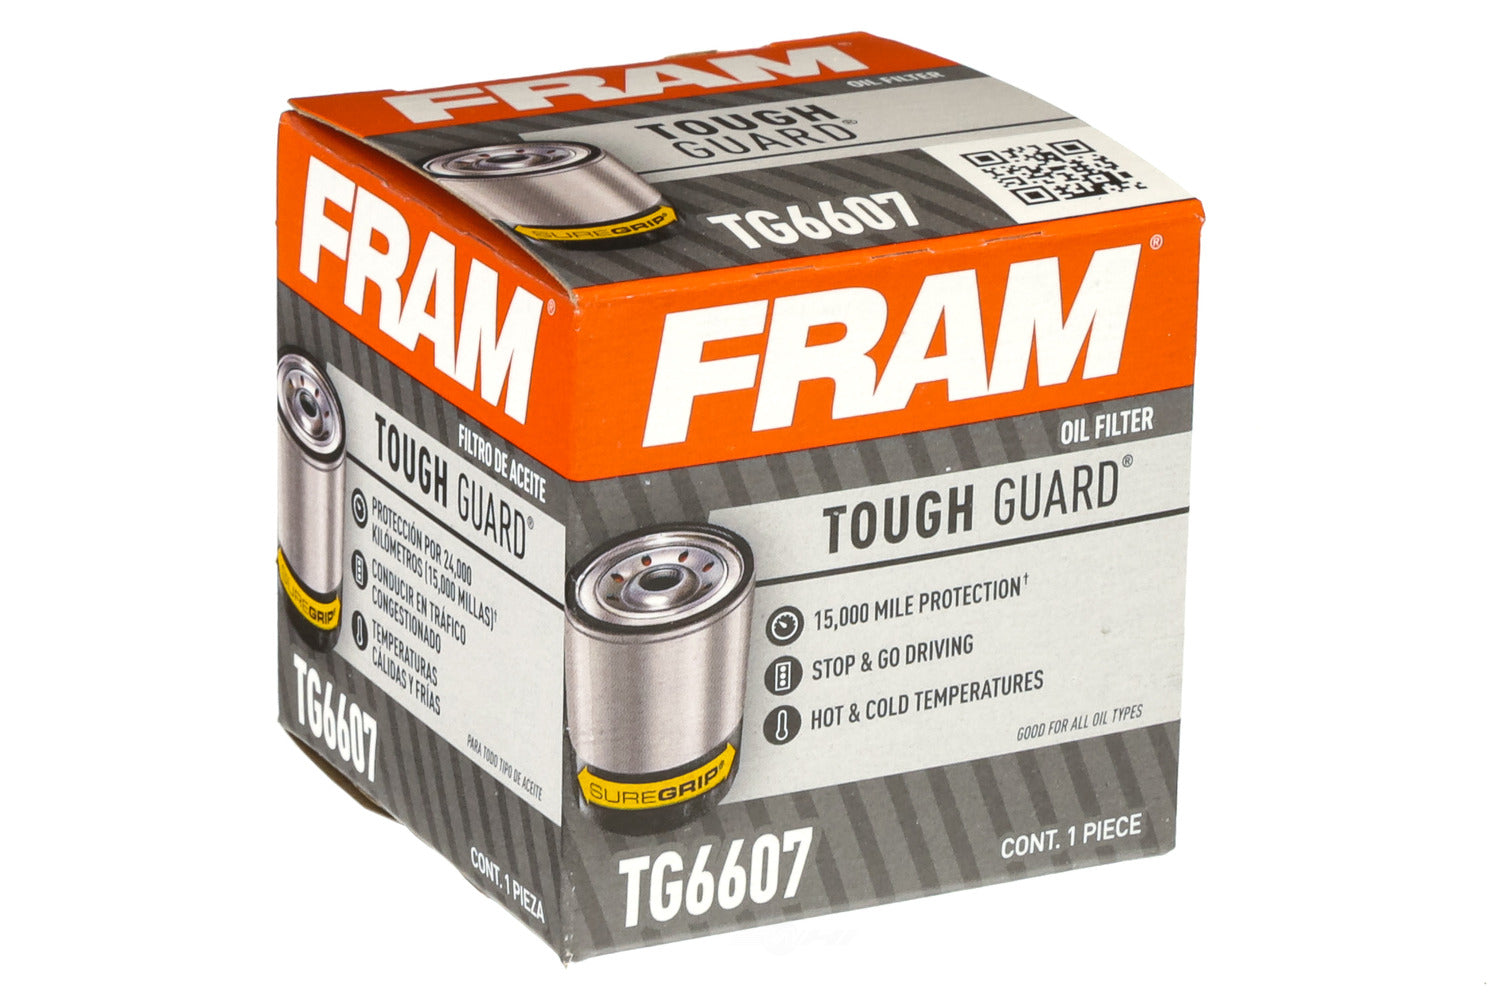 TG6607 FRAM Tough Guard Oil Filter